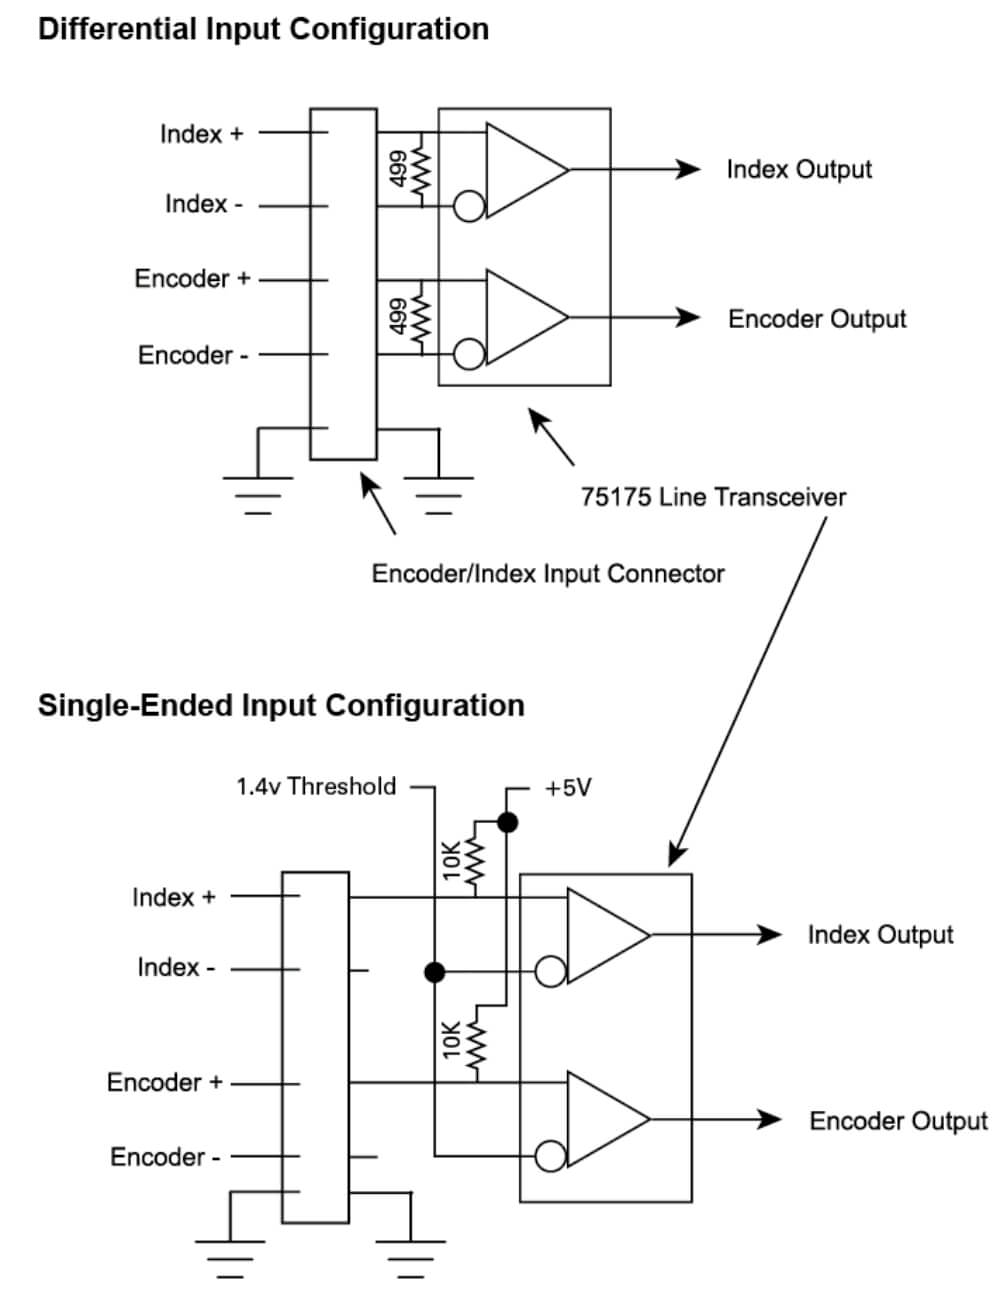 Differential Input Configuration